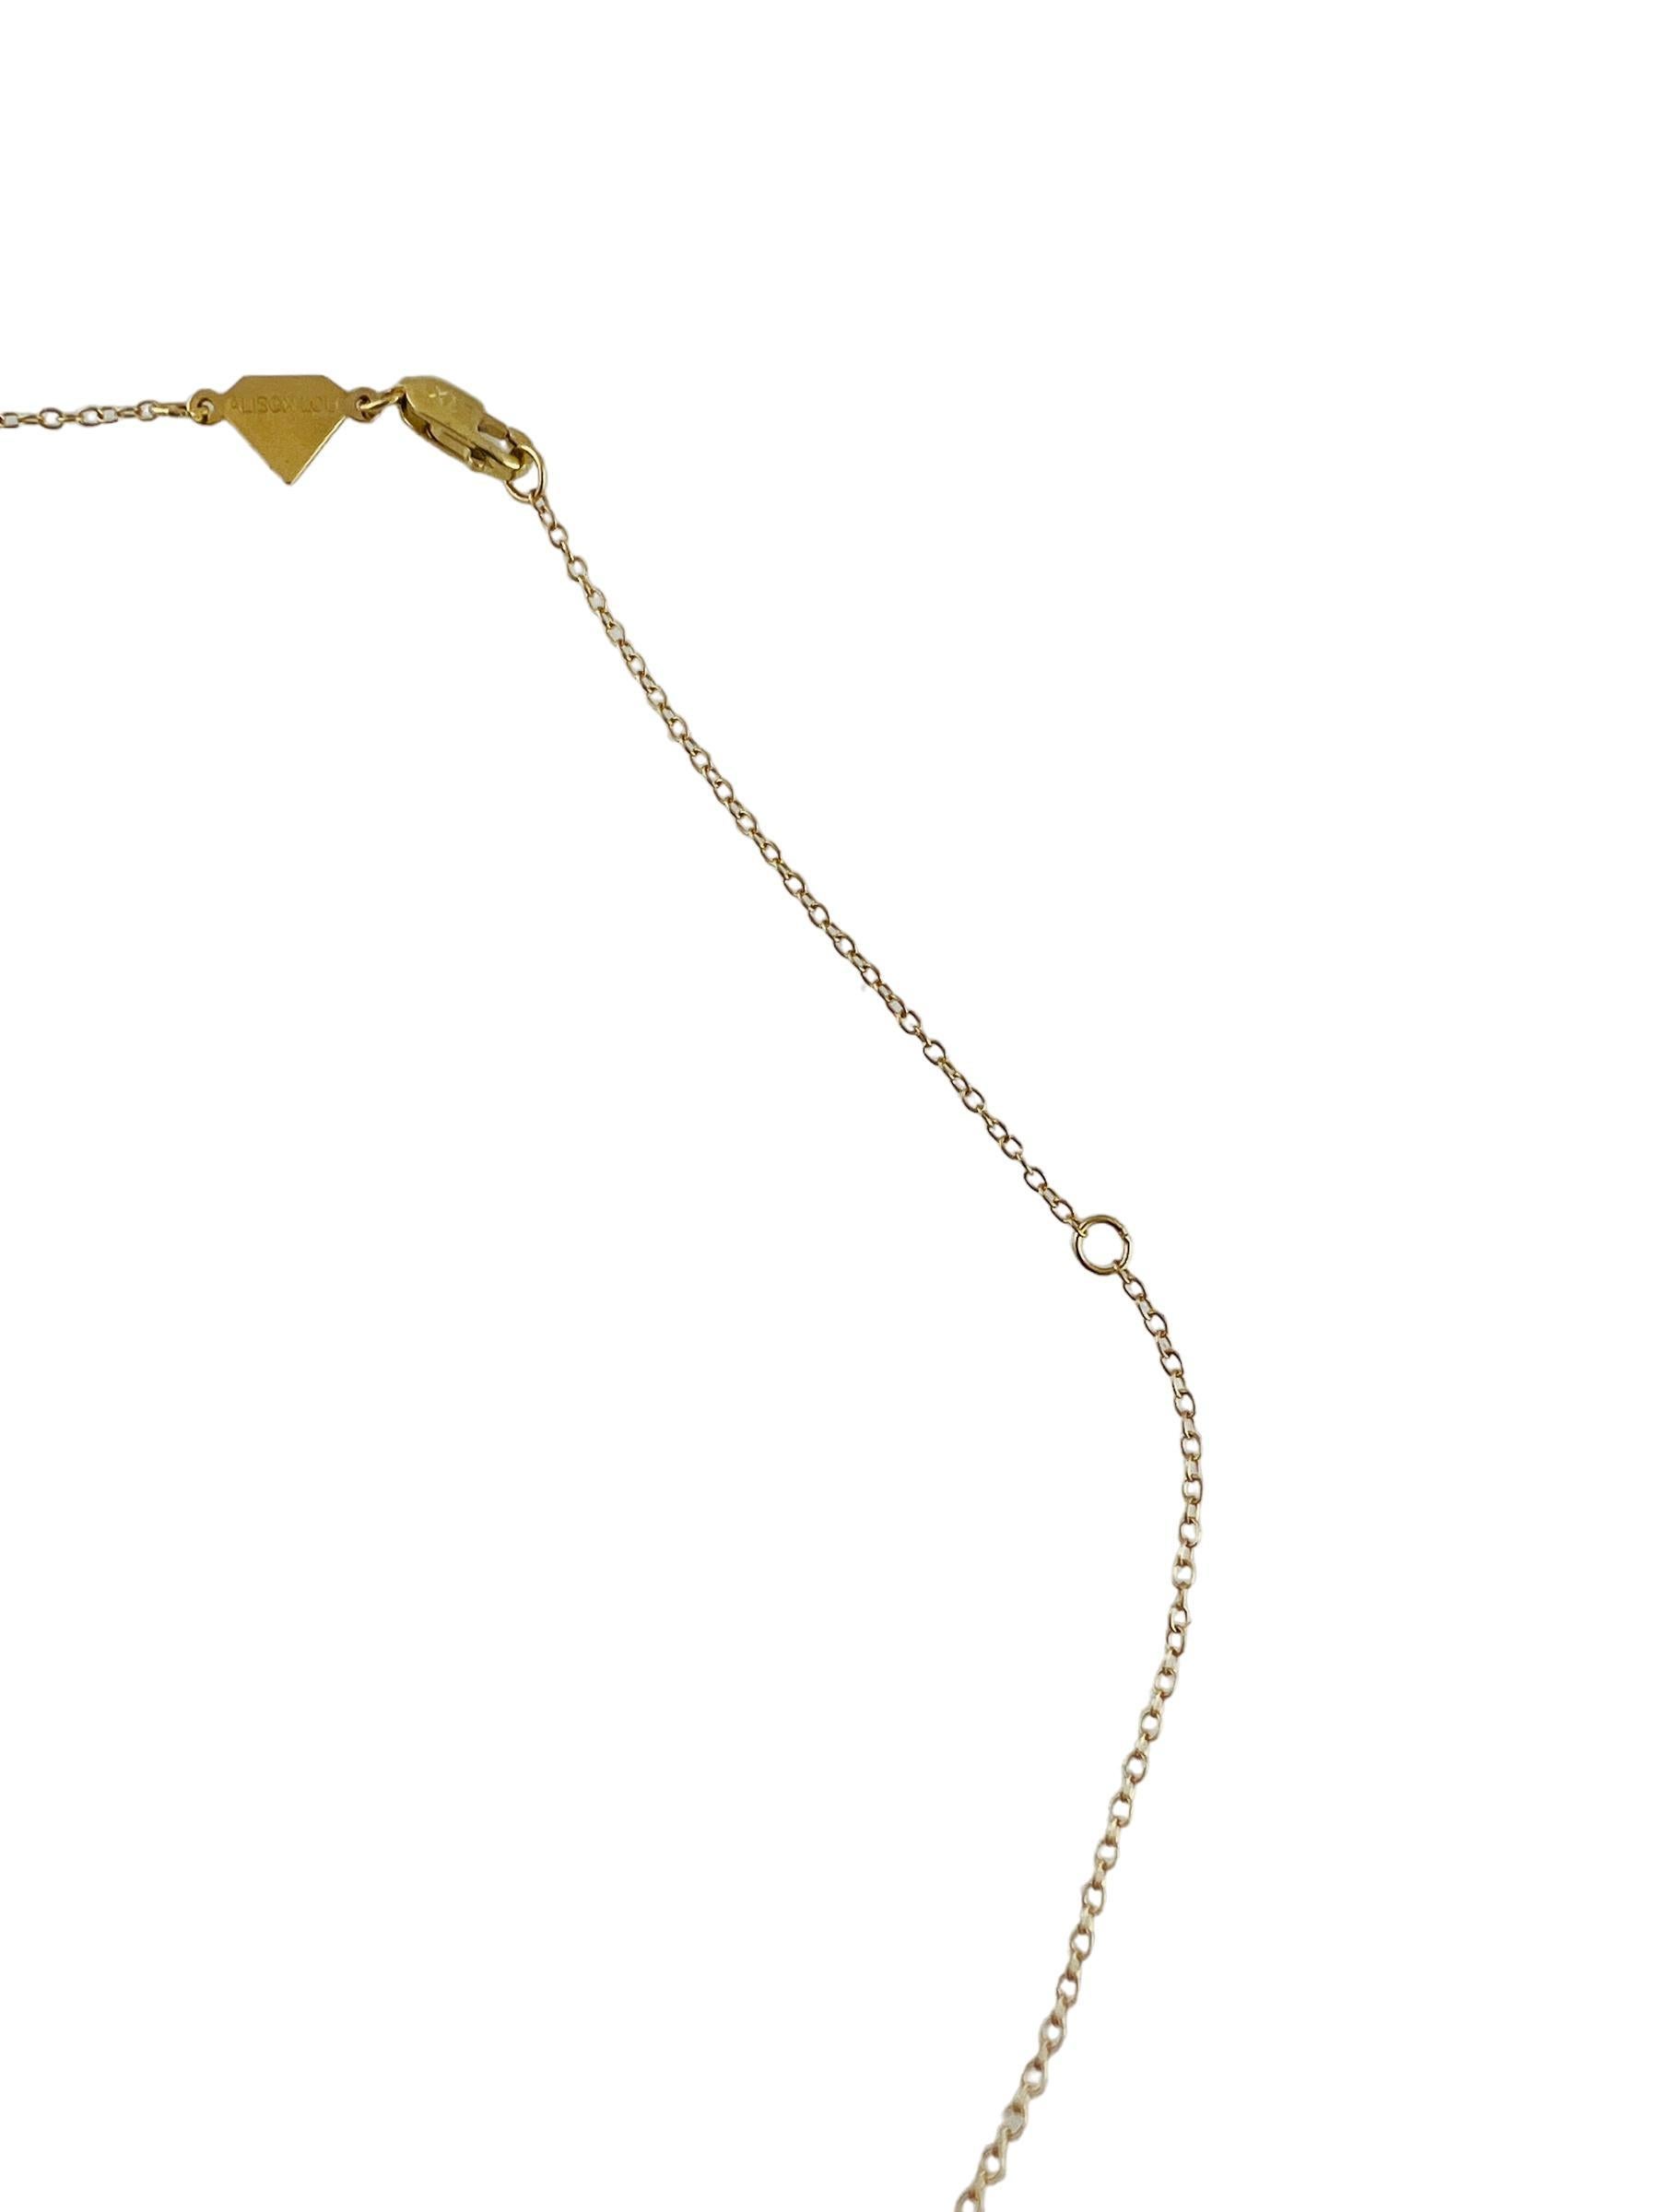 Alison Lou 14K Yellow Gold Adjustable Chain 16 - 18